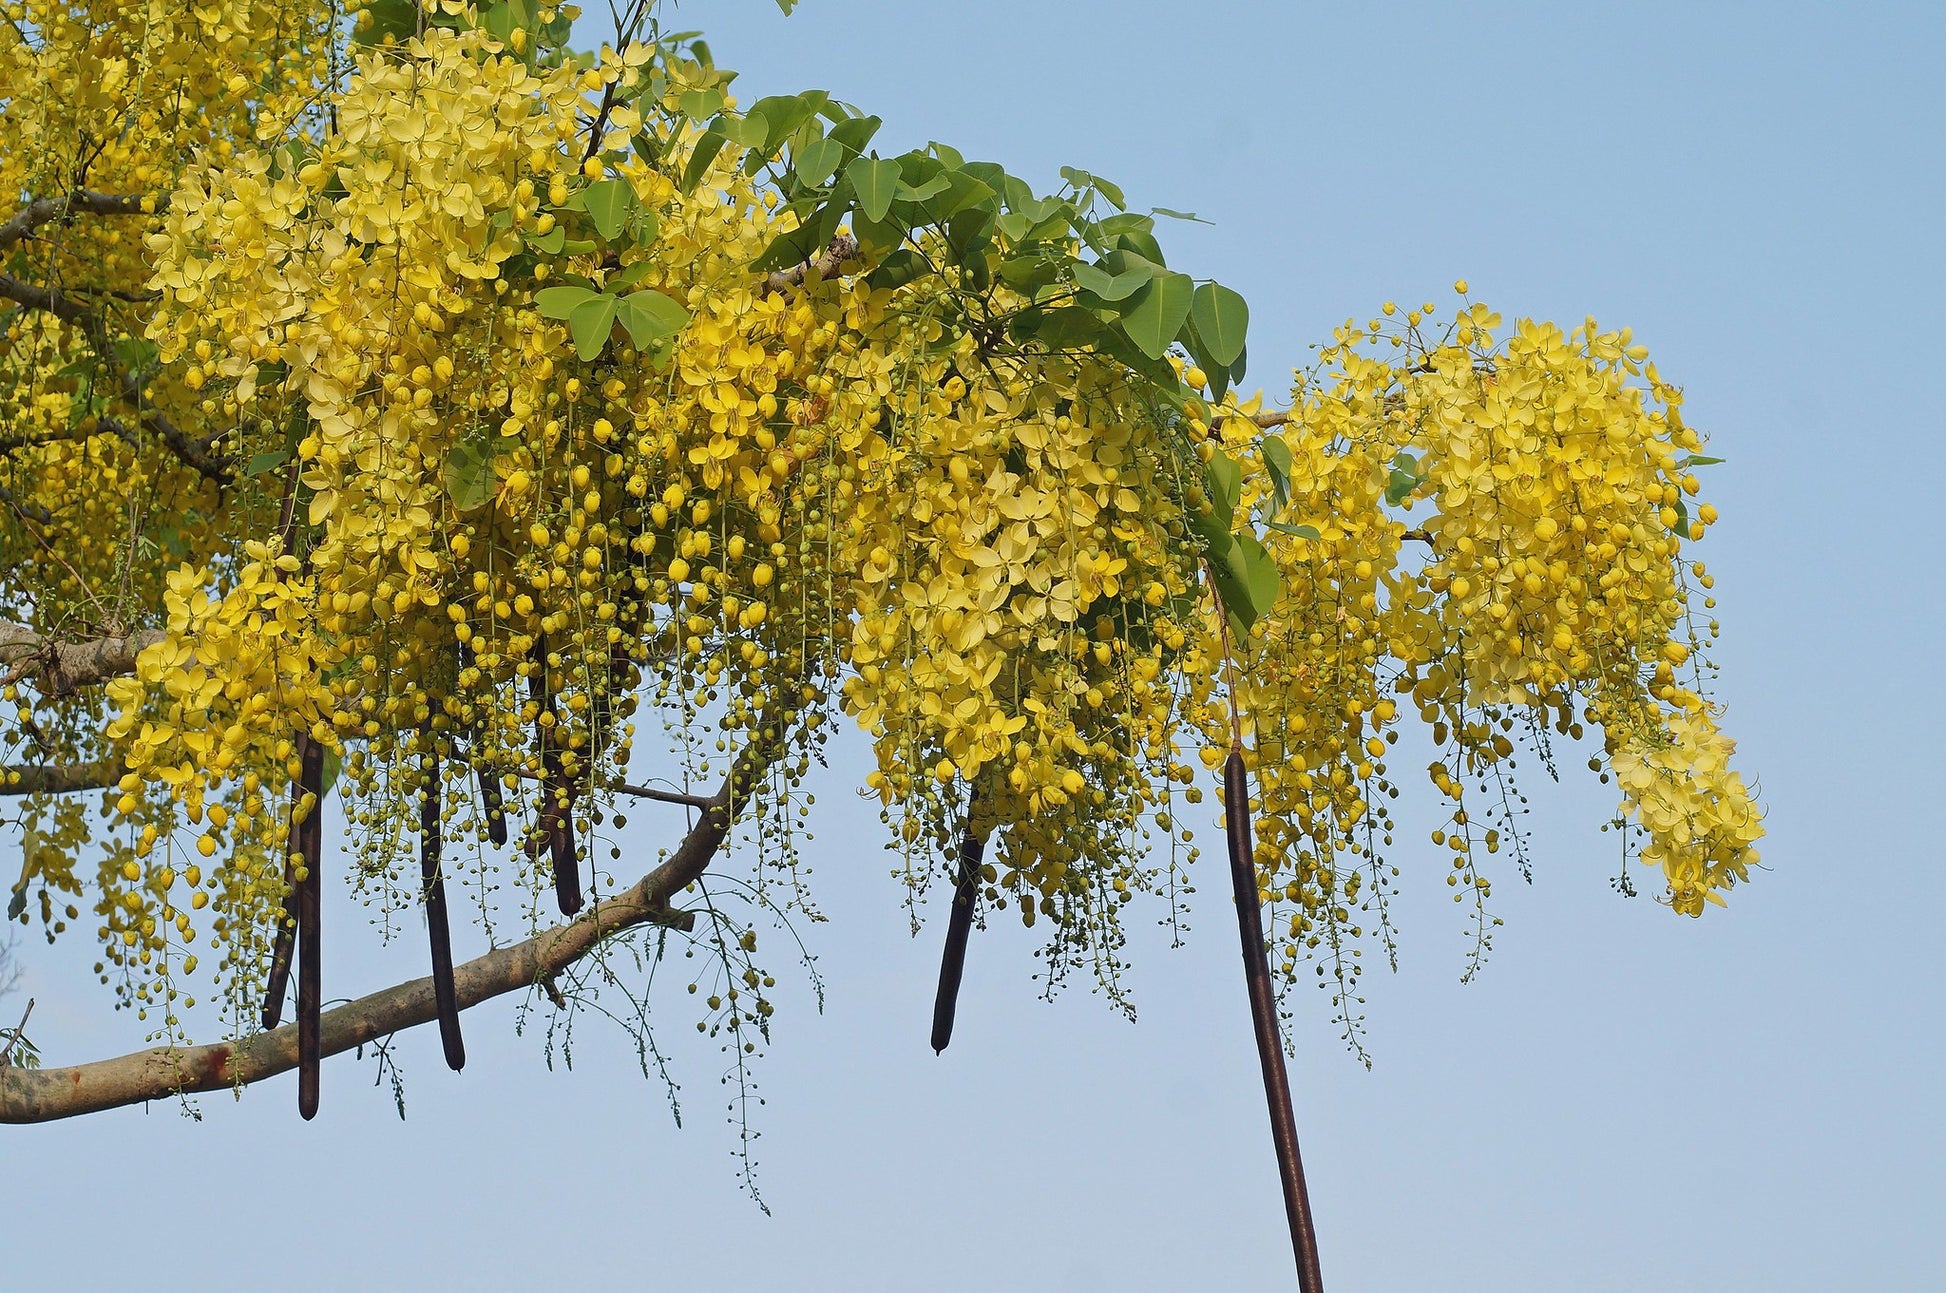 Cassia fistula (Golden Shower Tree)